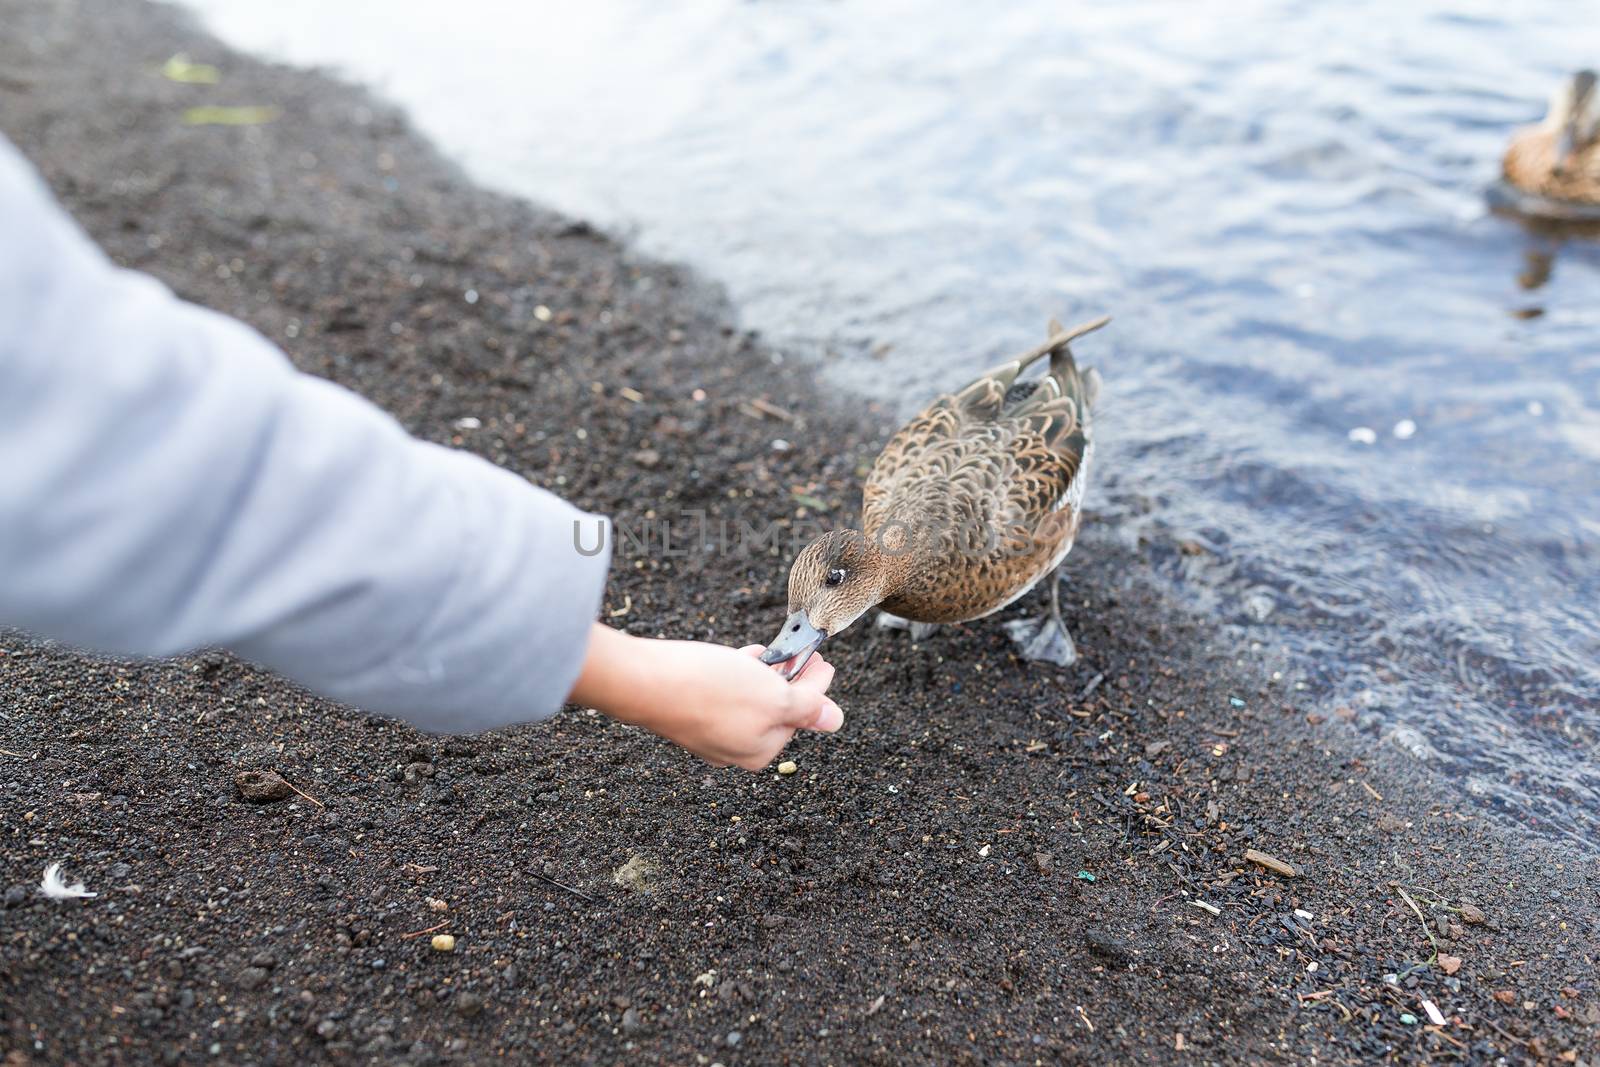 Feeding duck at lake side